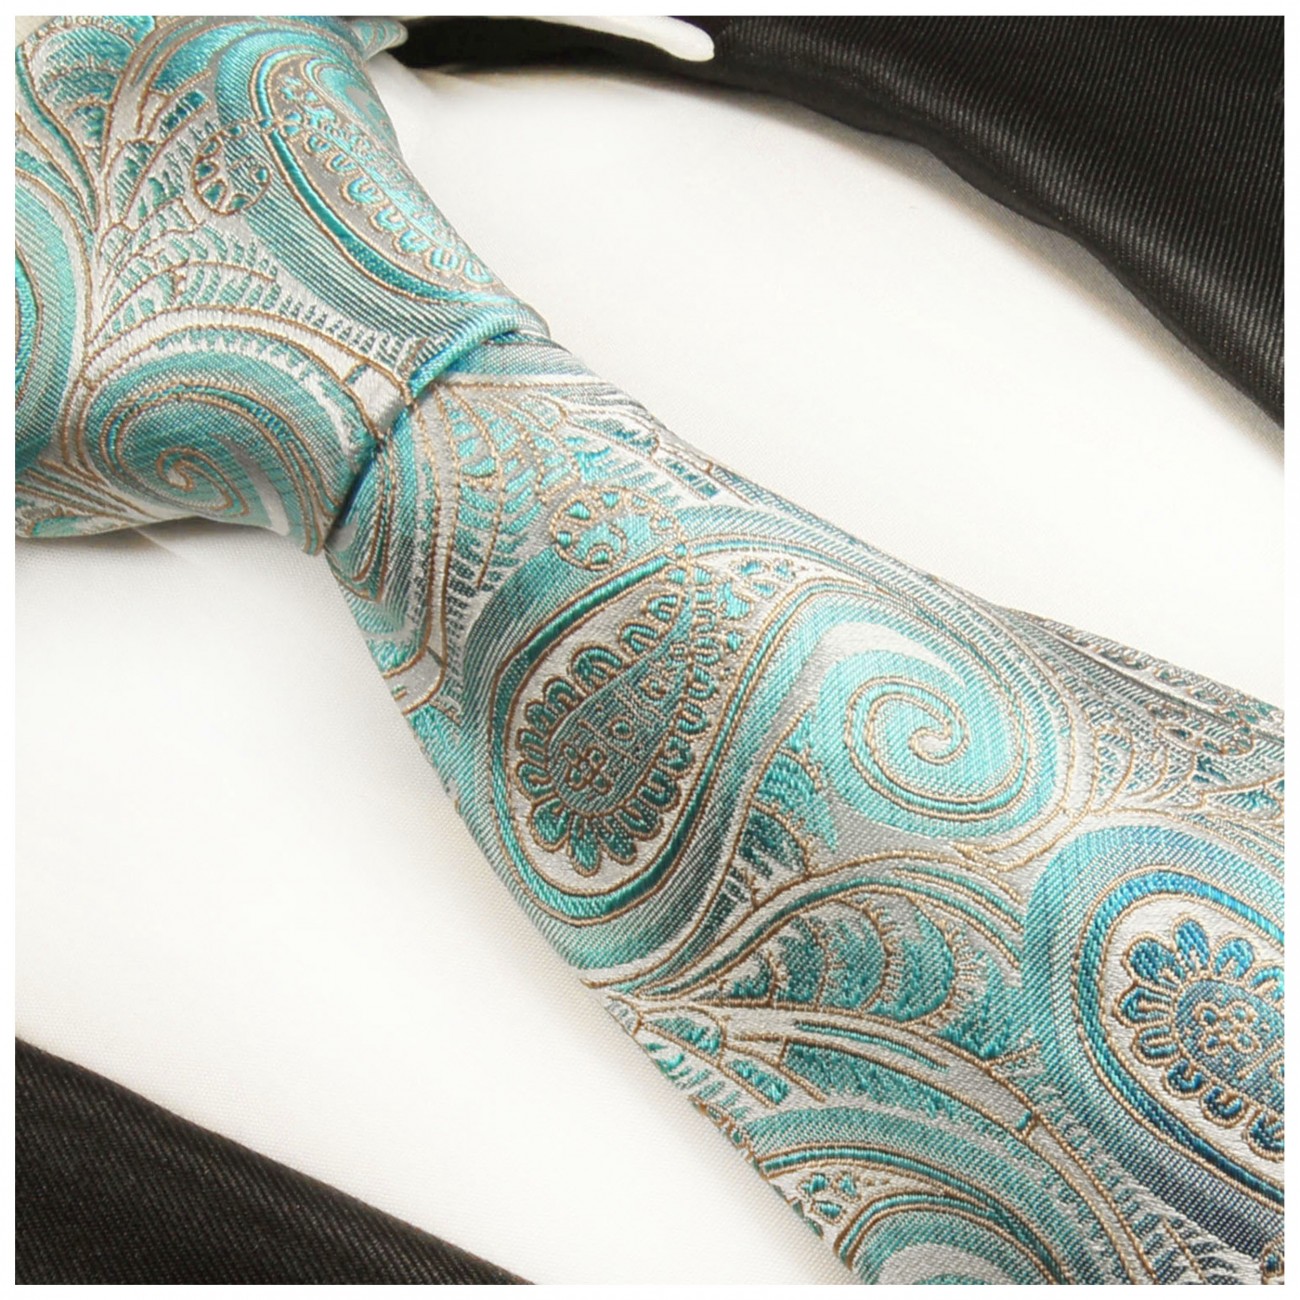 Krawatte türkis grau paisley brokat 2016